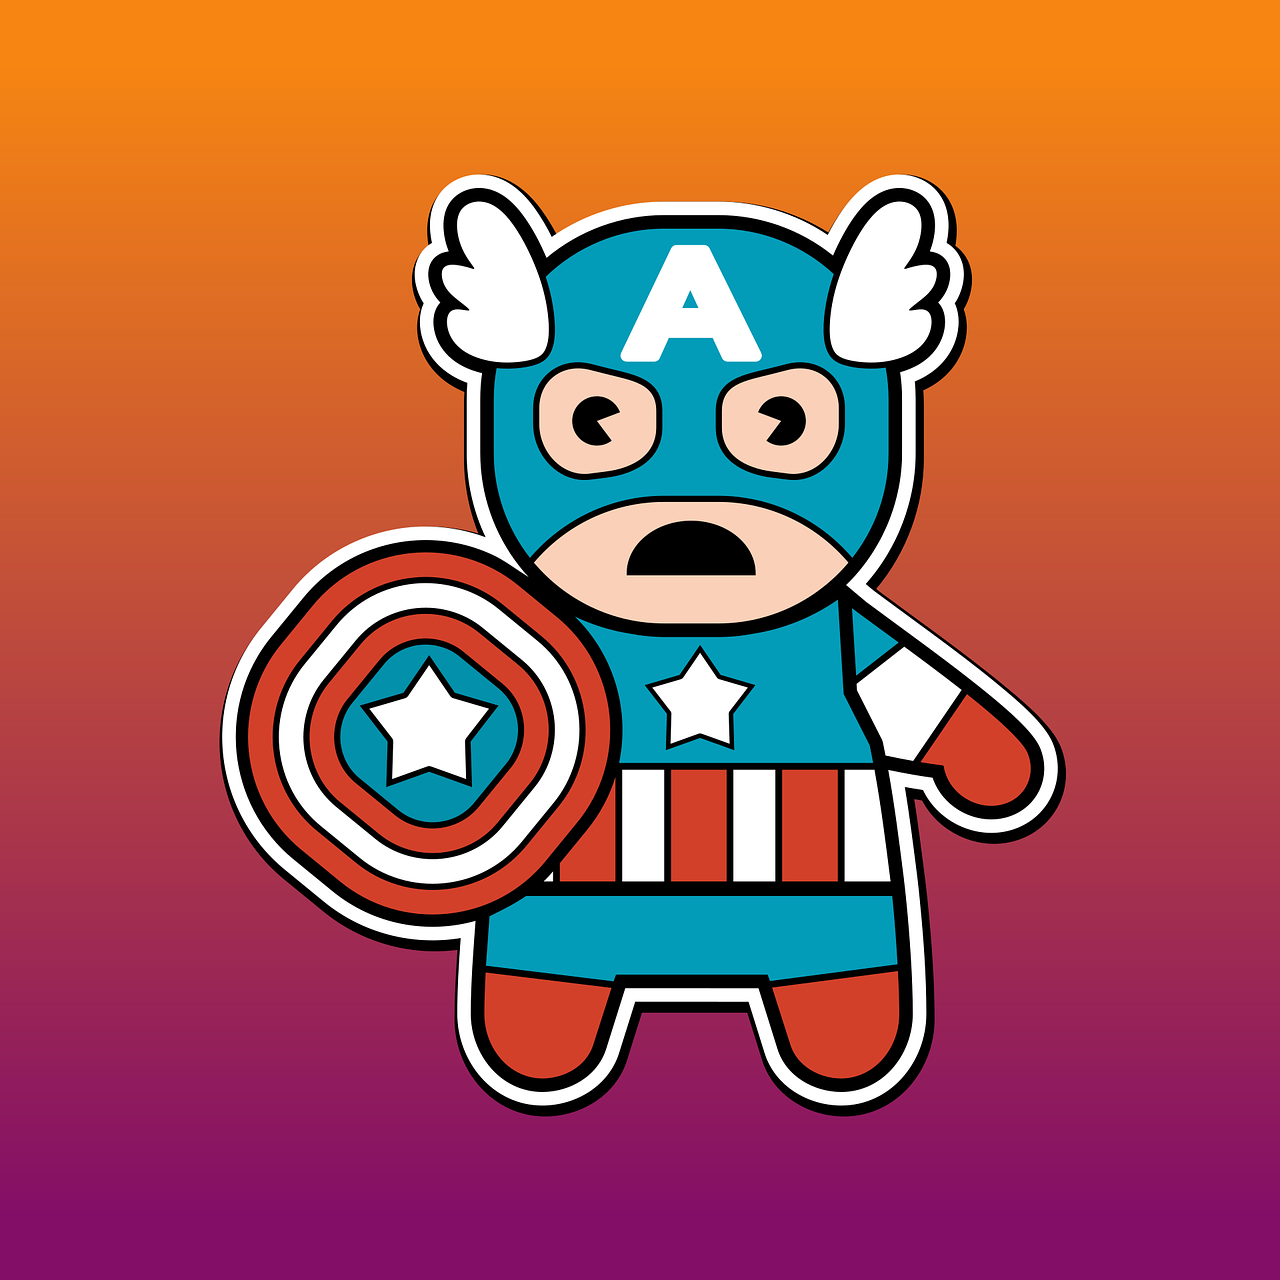 Cartoon Captain America, Avengers by Ronny Overhate